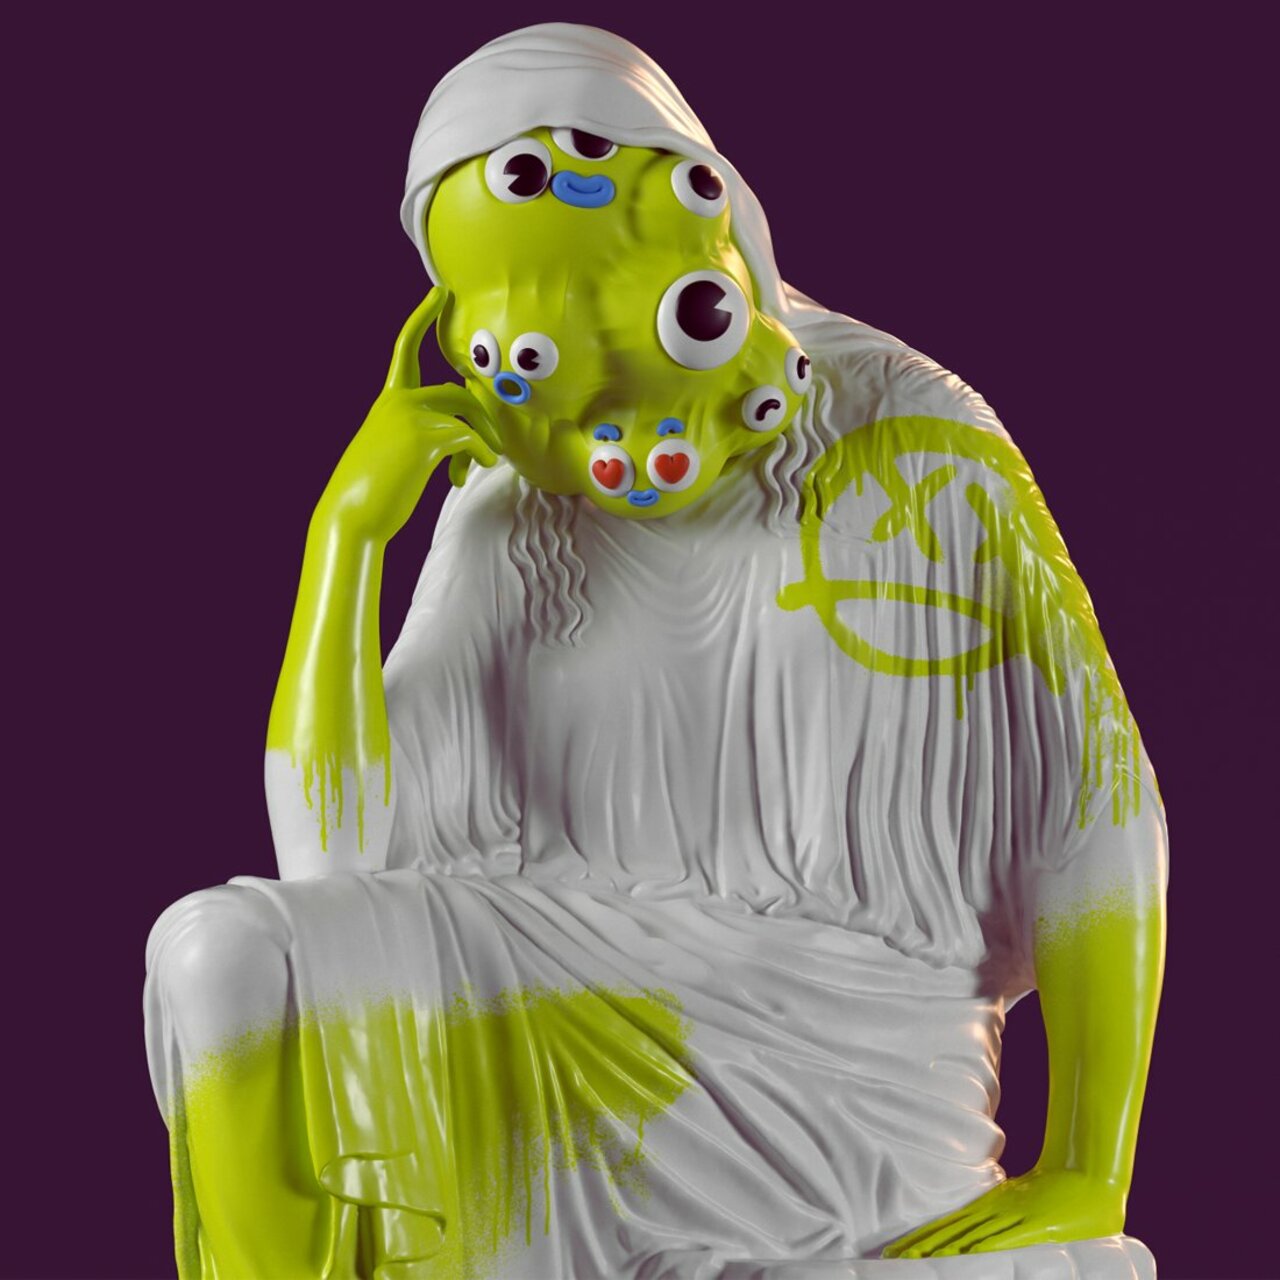 Emoji face  #emoji #emojiday #3D #sculpture #art #face #characterdesign #character #kawaii #artsy #yellow #marble #woman #graffiti #worldemojiday https://t.co/xXAstagcNP